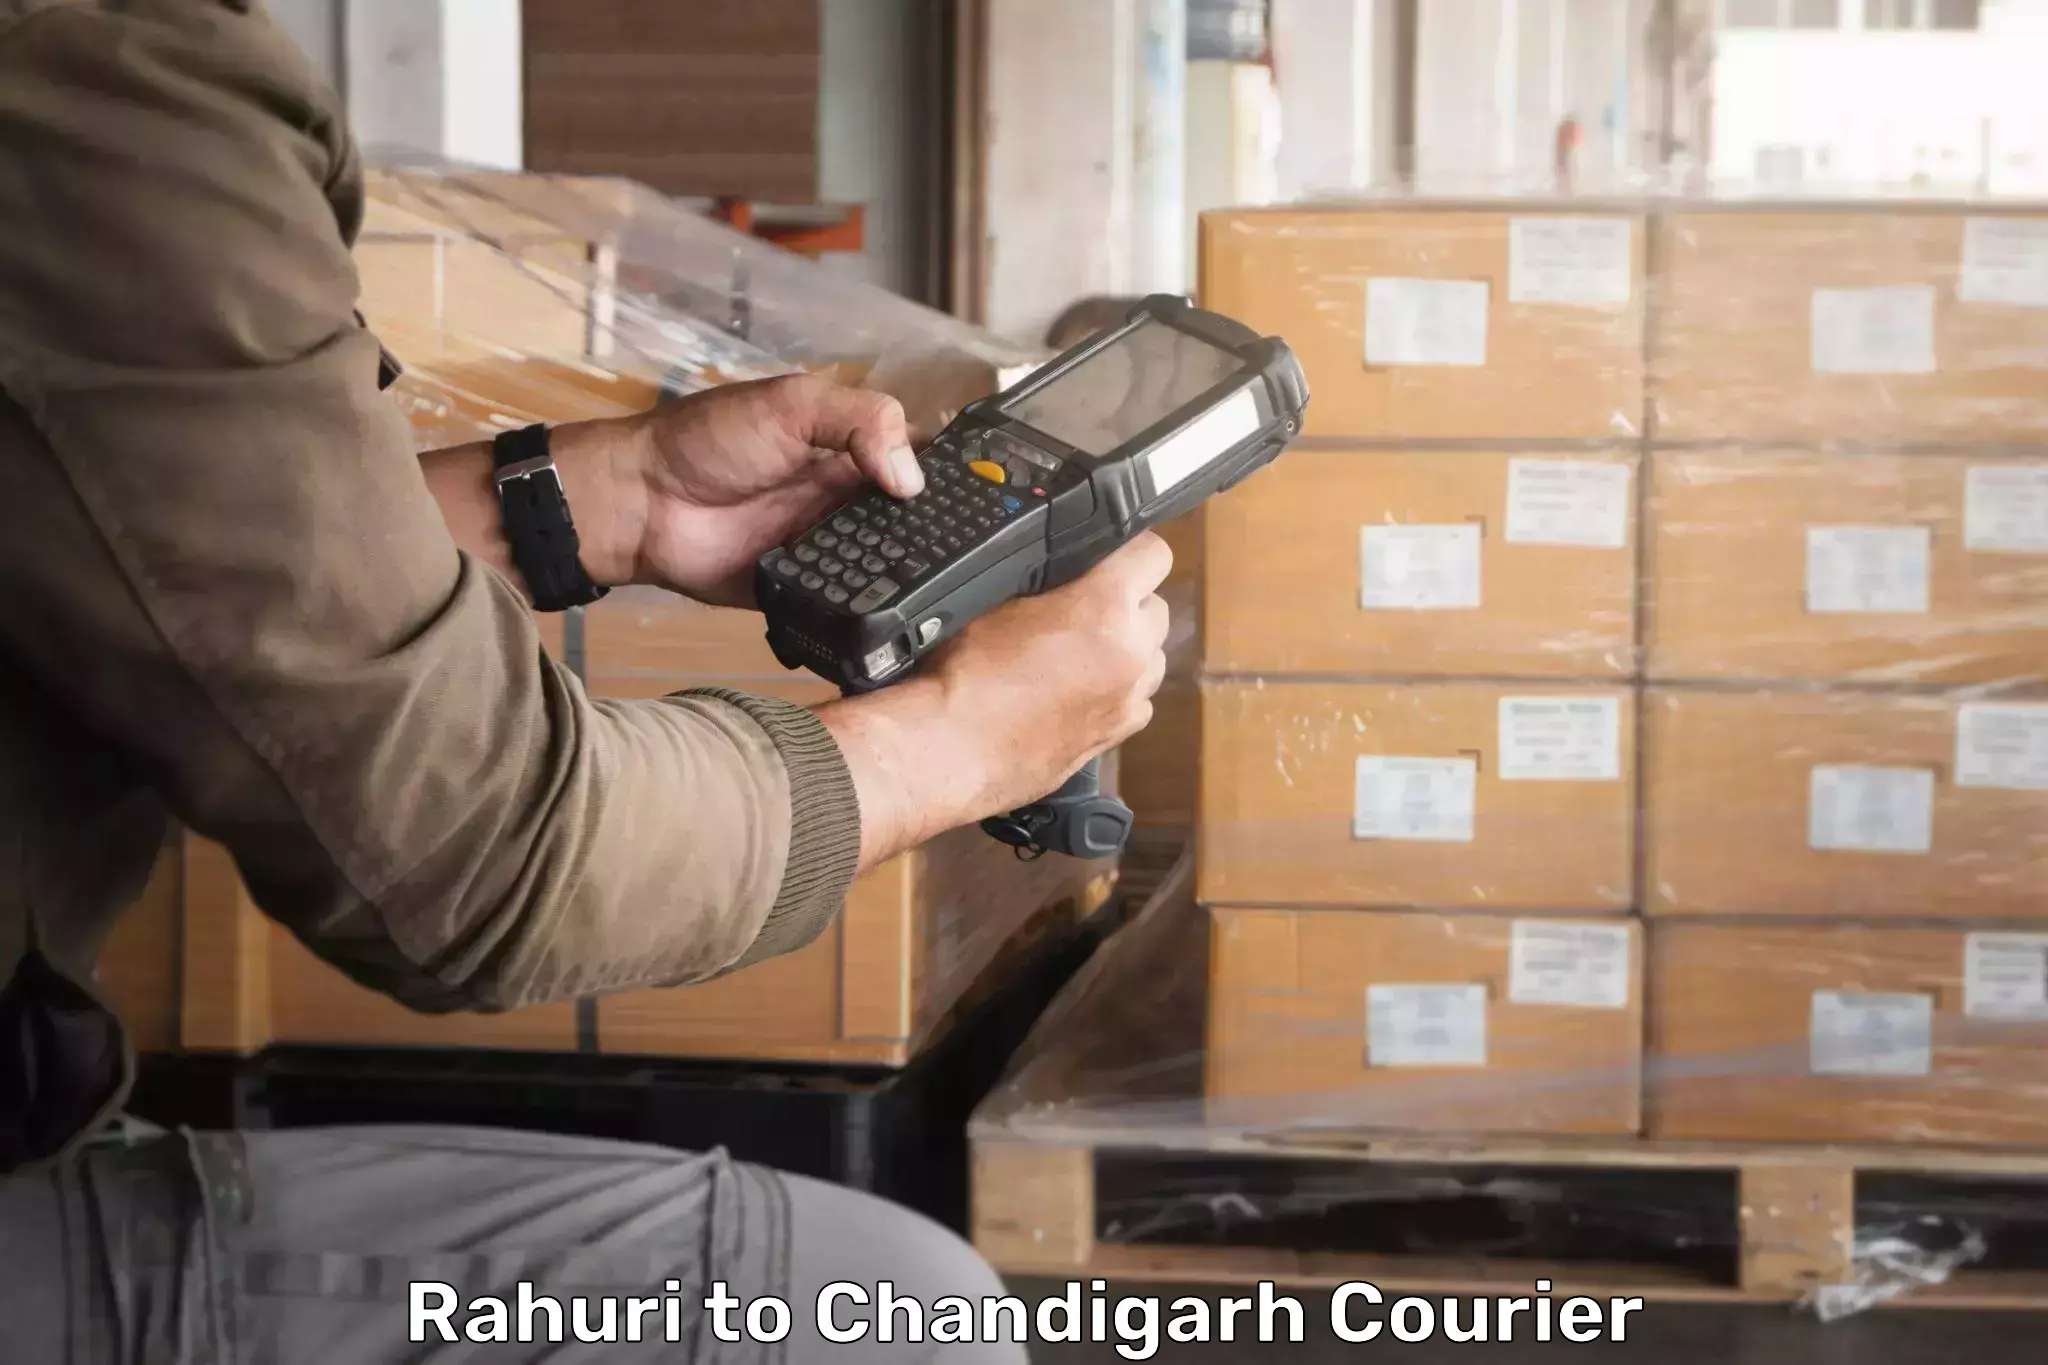 Modern courier technology Rahuri to Chandigarh